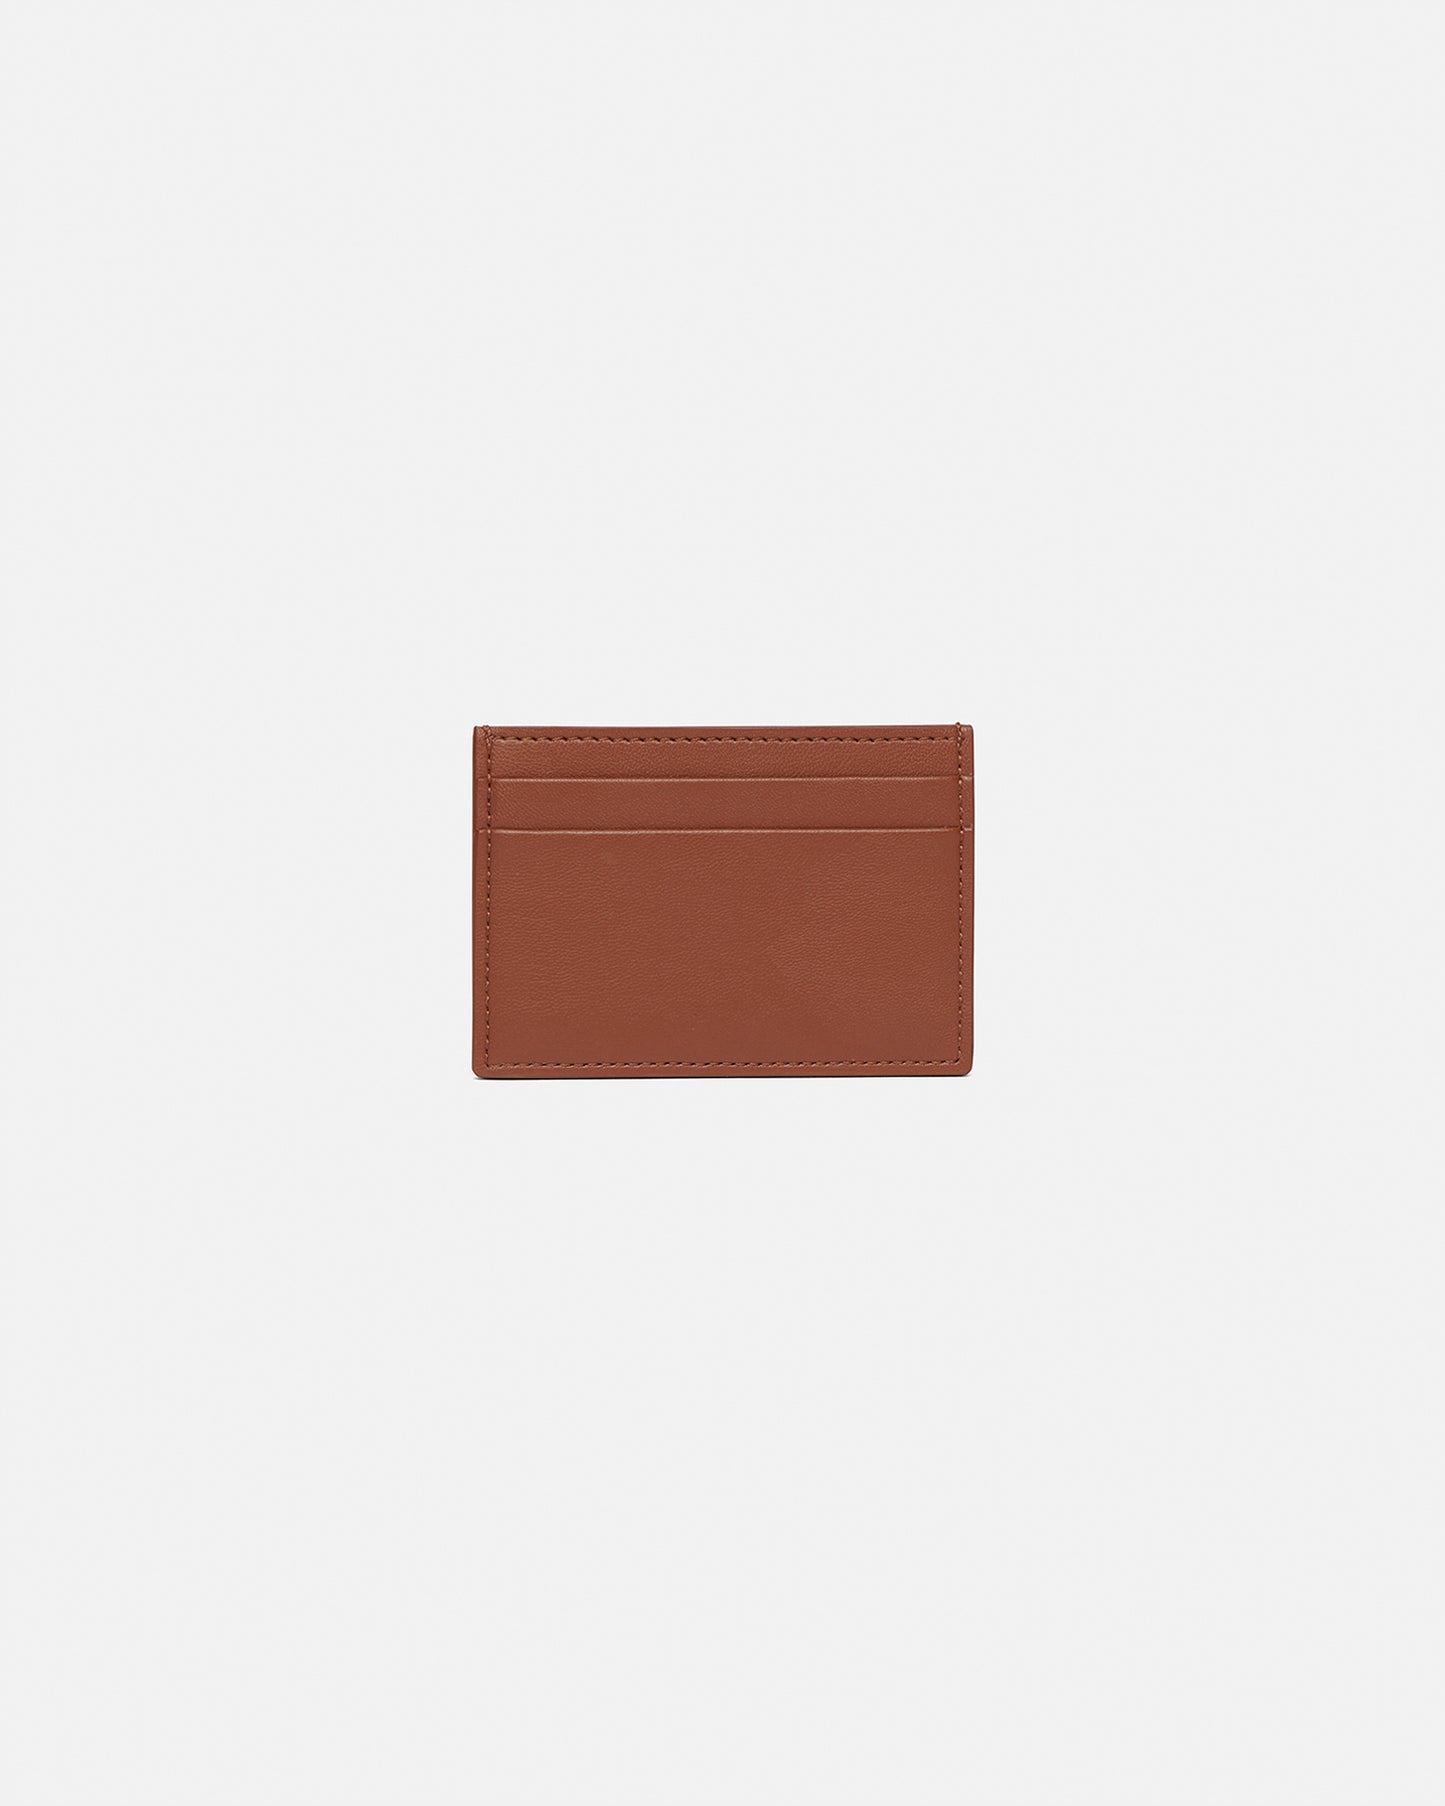 Gilbert - Alt-Nappa Cardholder - Tan Leather